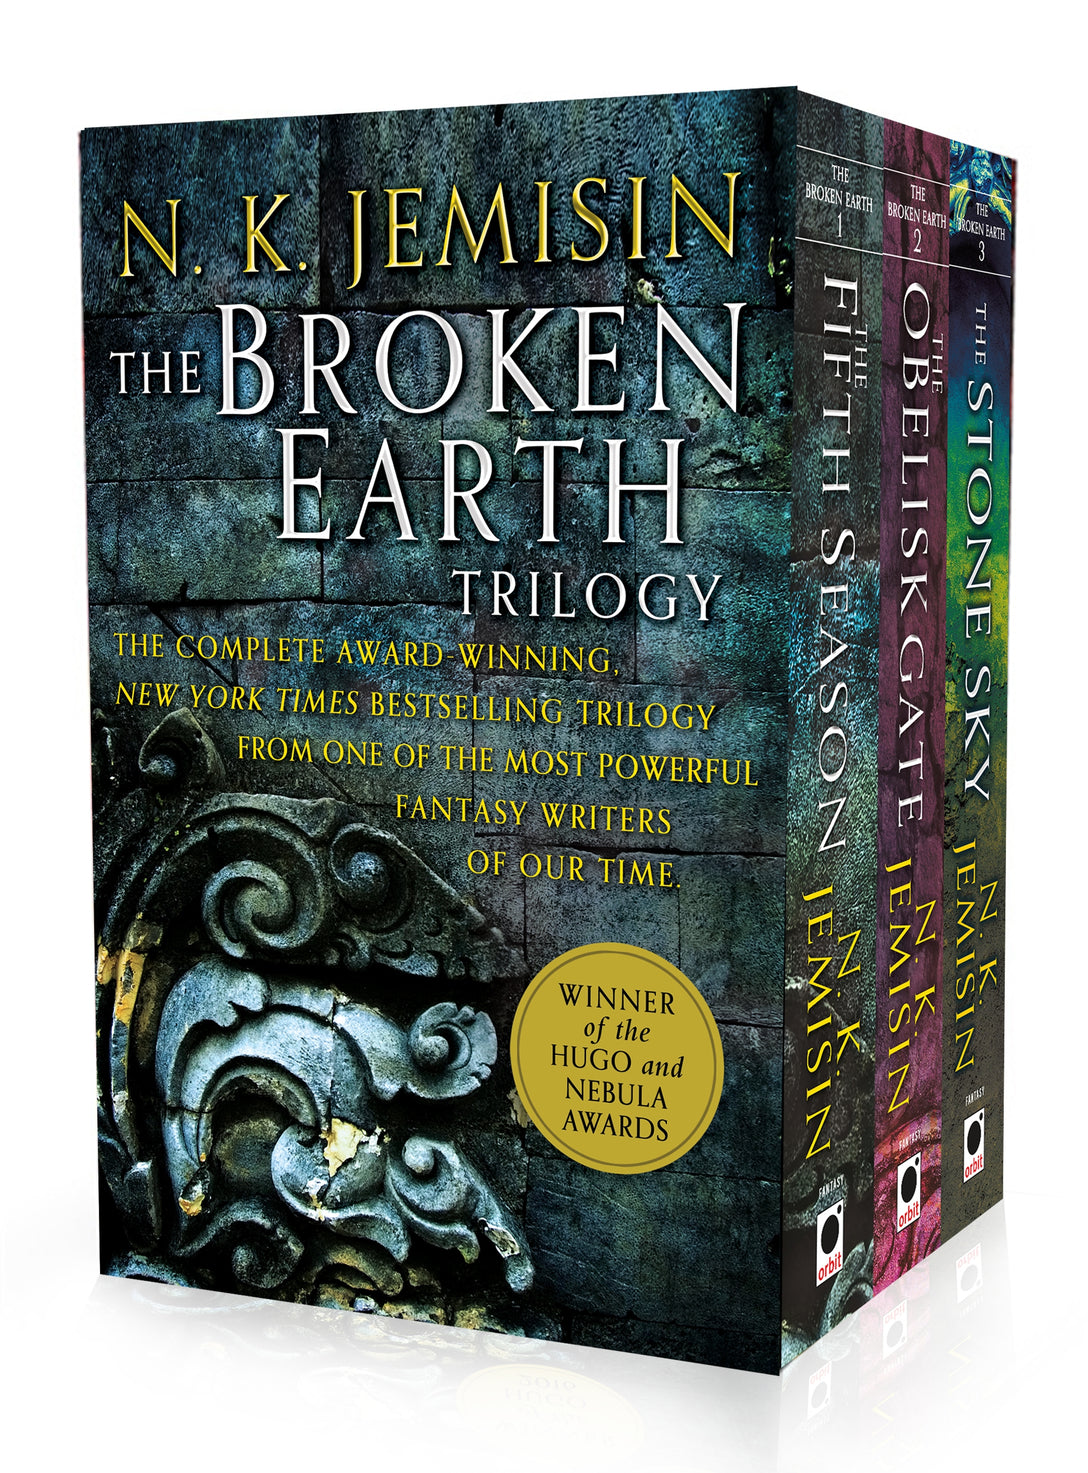 The Broken Earth Trilogy: Box set edition by N. K. Jemisin